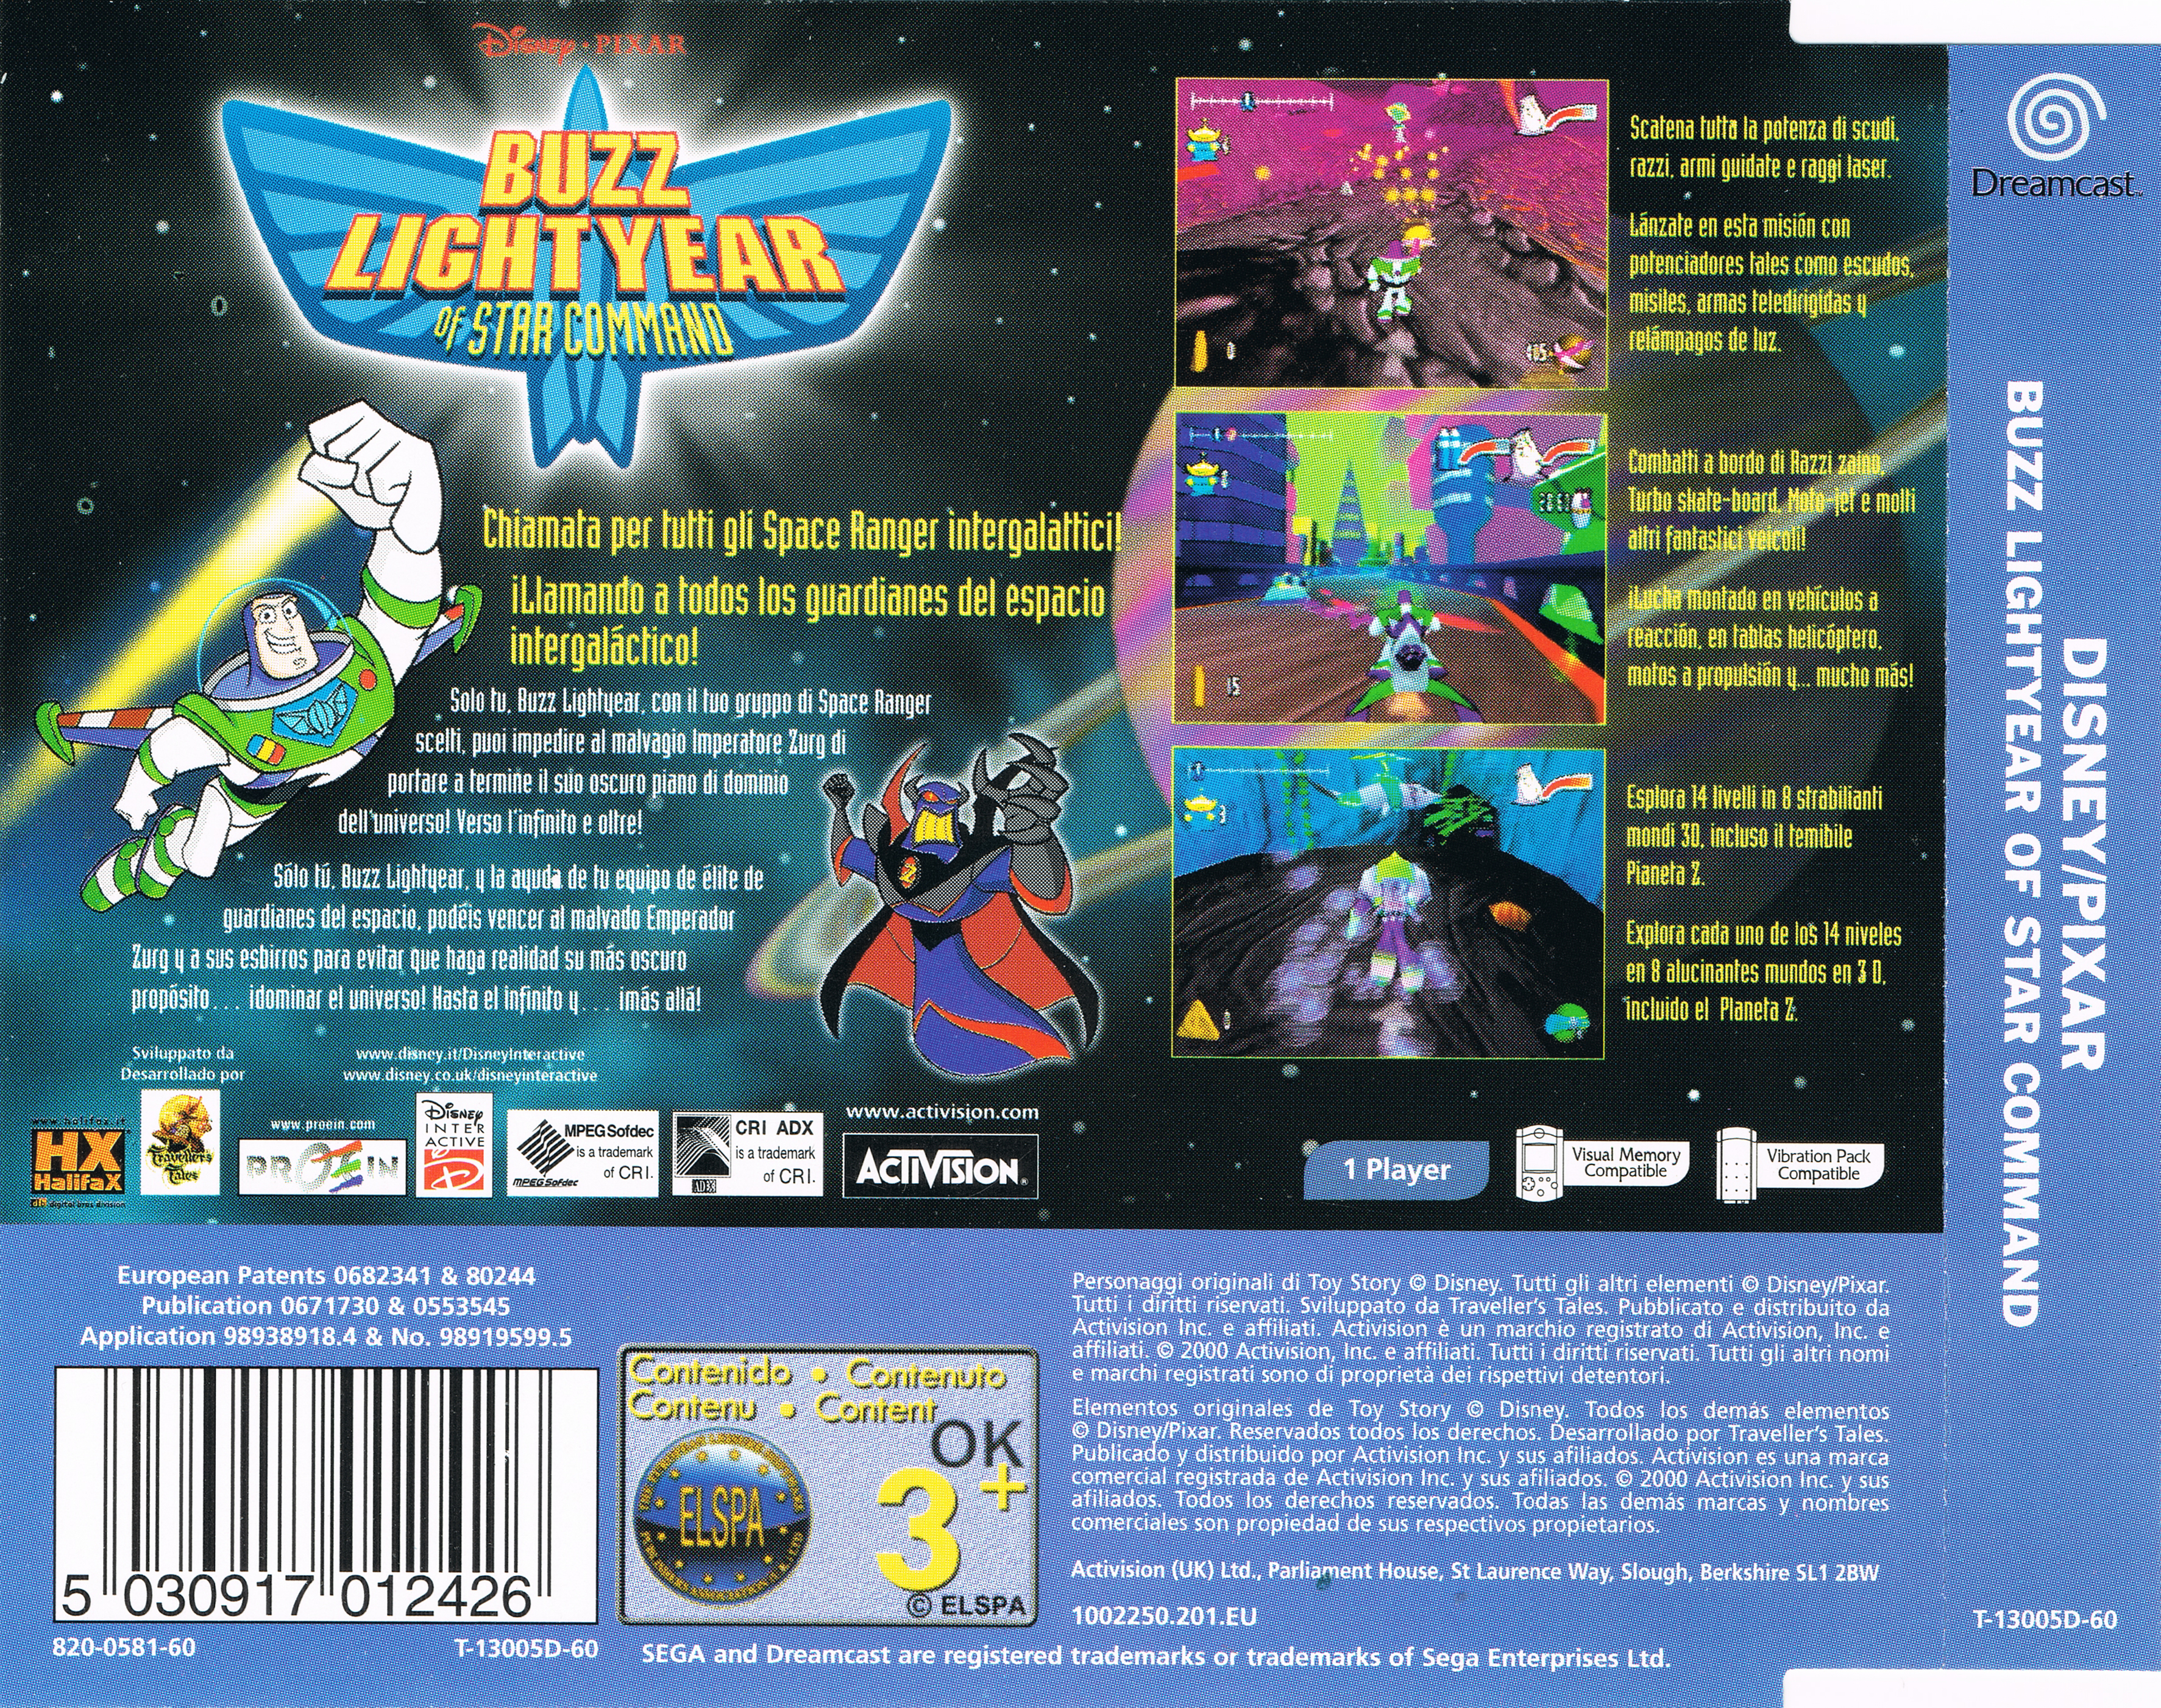 Lightyear frontier читы. Buzz Lightyear of Star Command (игра). Disney-Pixar Buzz Lightyear of Star Command. Buzz Lightyear of Star Command Dreamcast. Buzz Lightyear Dreamcast.